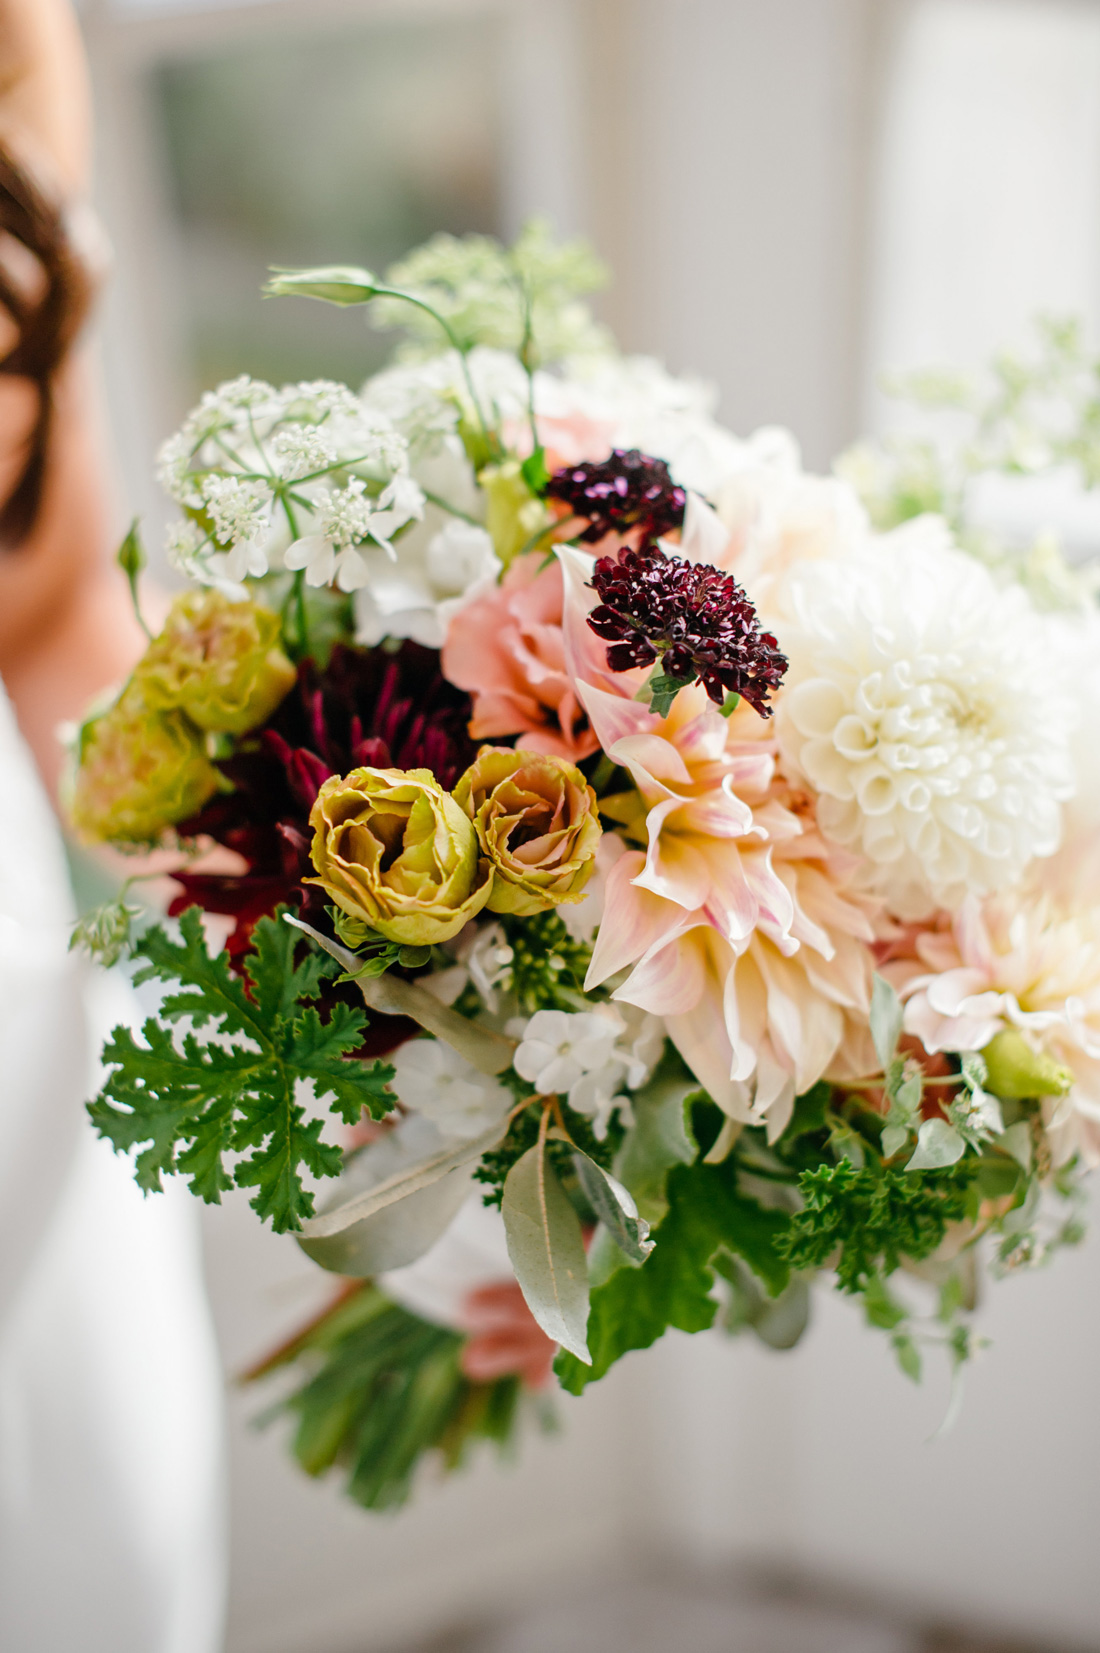 Garden Party Wedding, flowers by LynnVale Studios, photo by Rebekah Murray